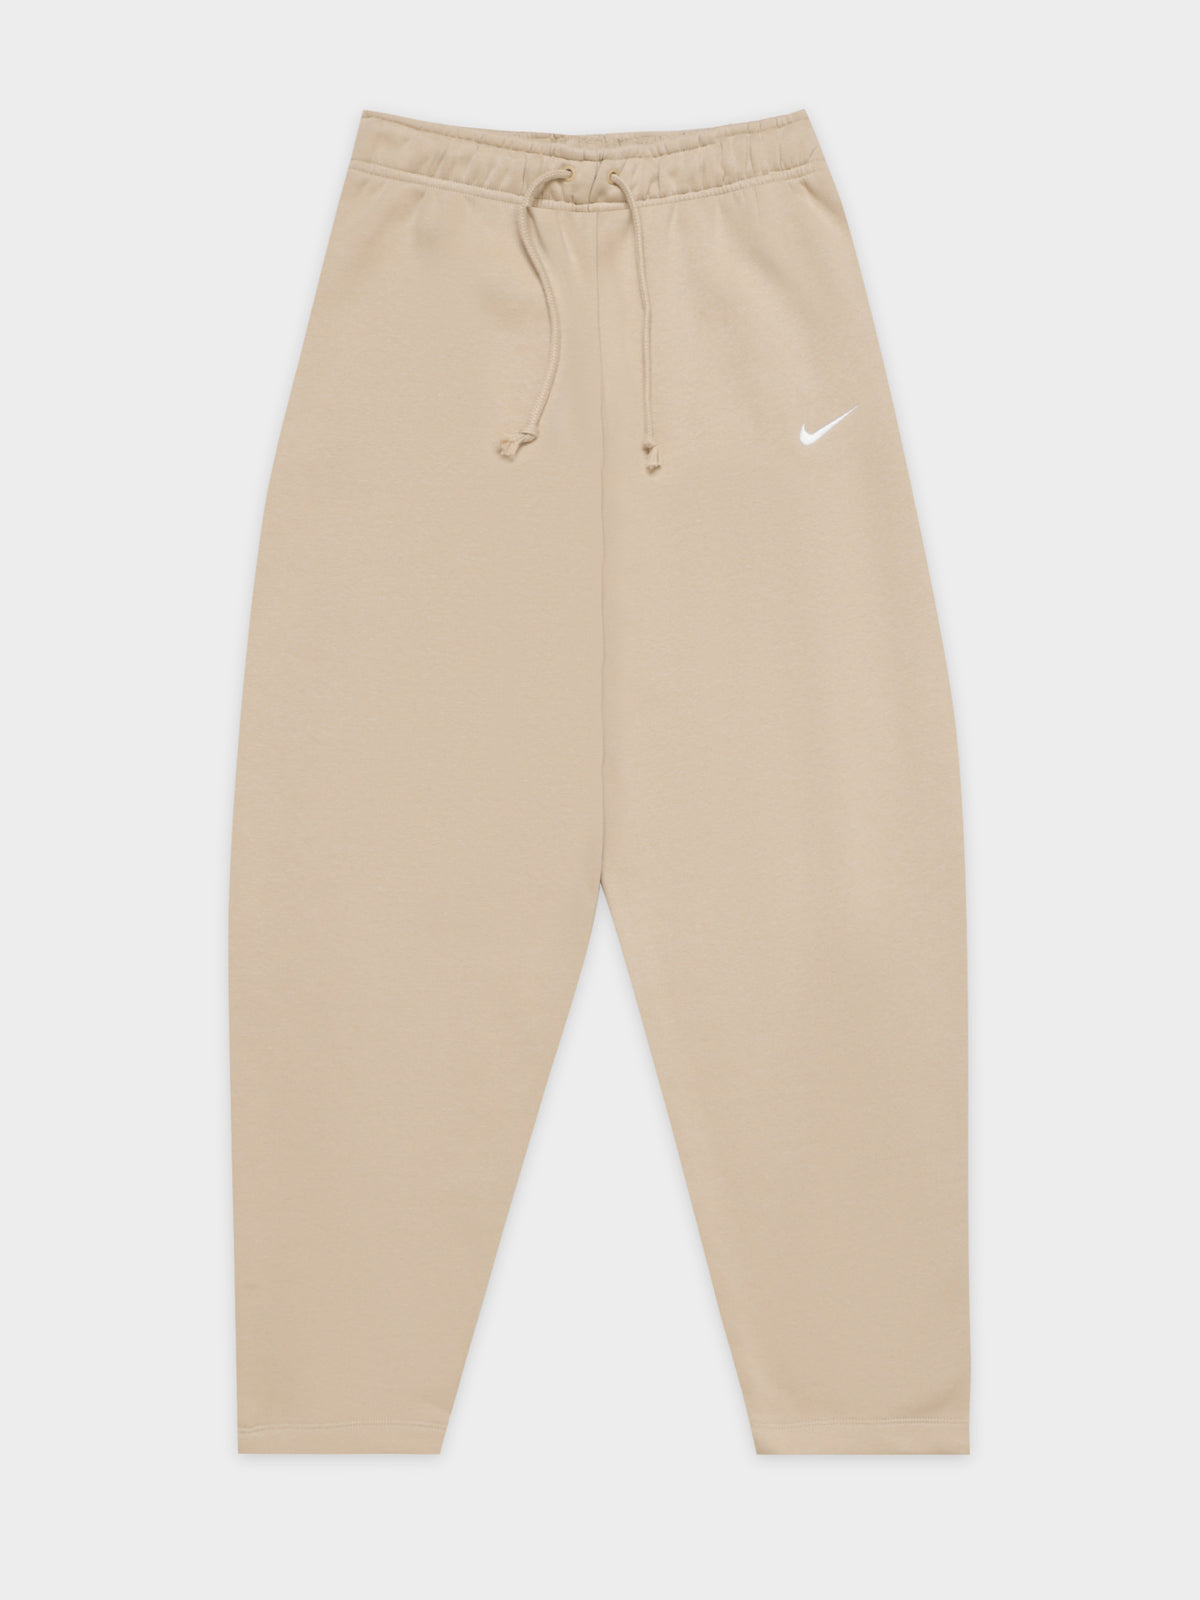 Sportswear Essential Collection Fleece Pants in Sand Drift